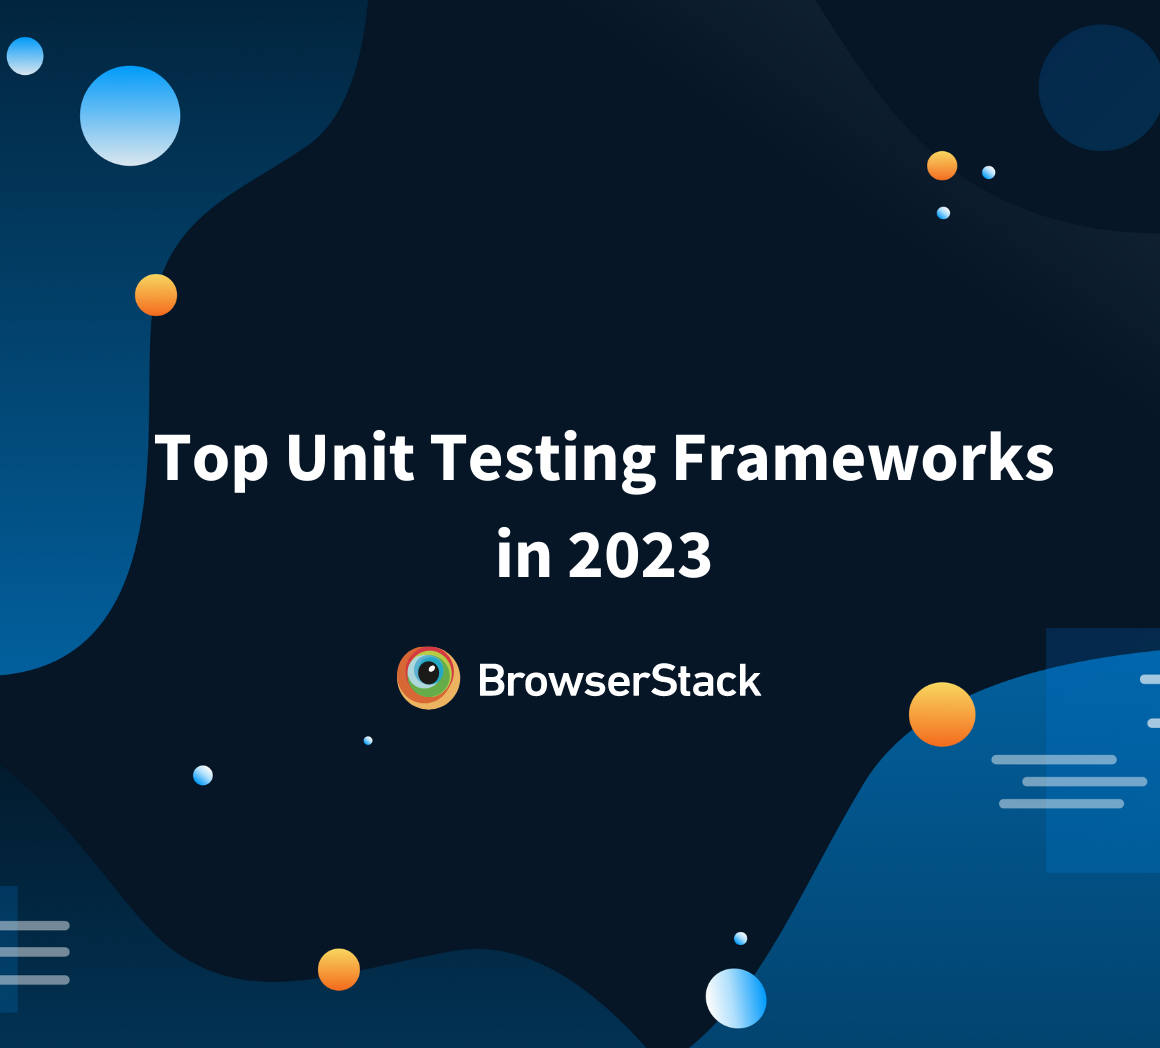 Top Unit Testing Frameworks in 2023